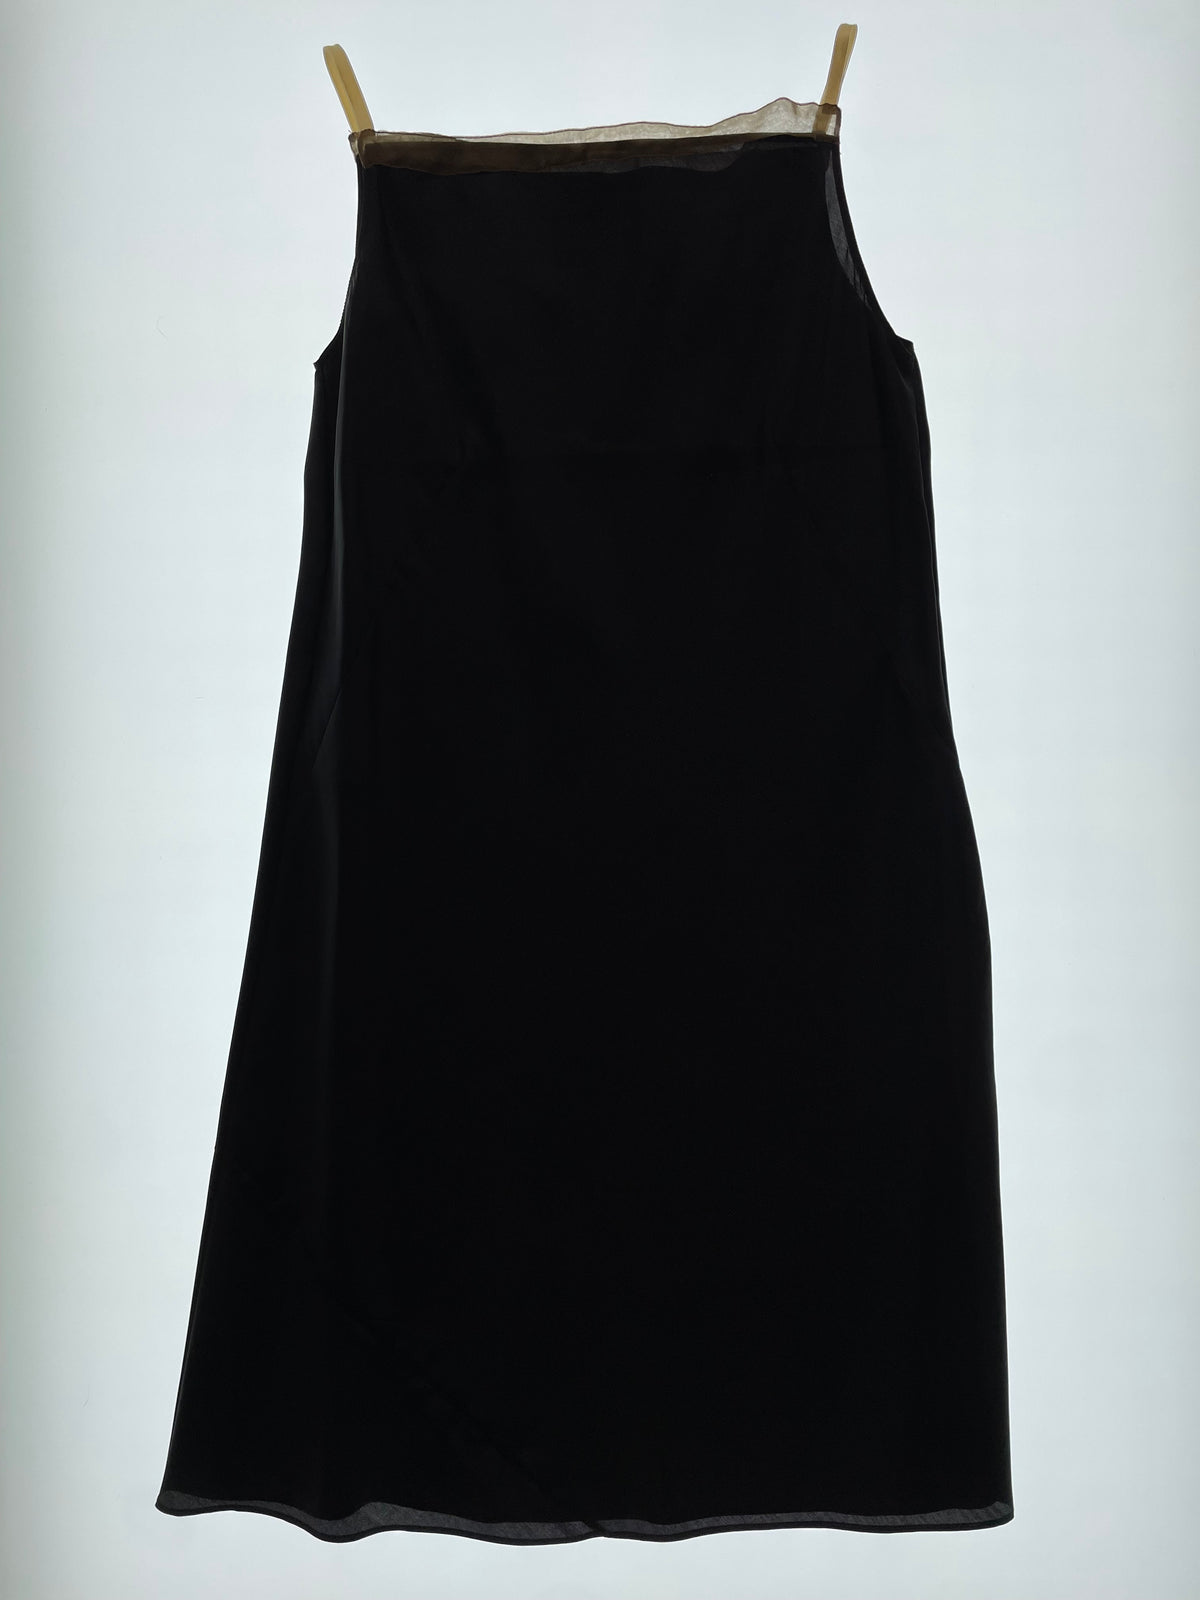 SS 97 Black and Beige Dress